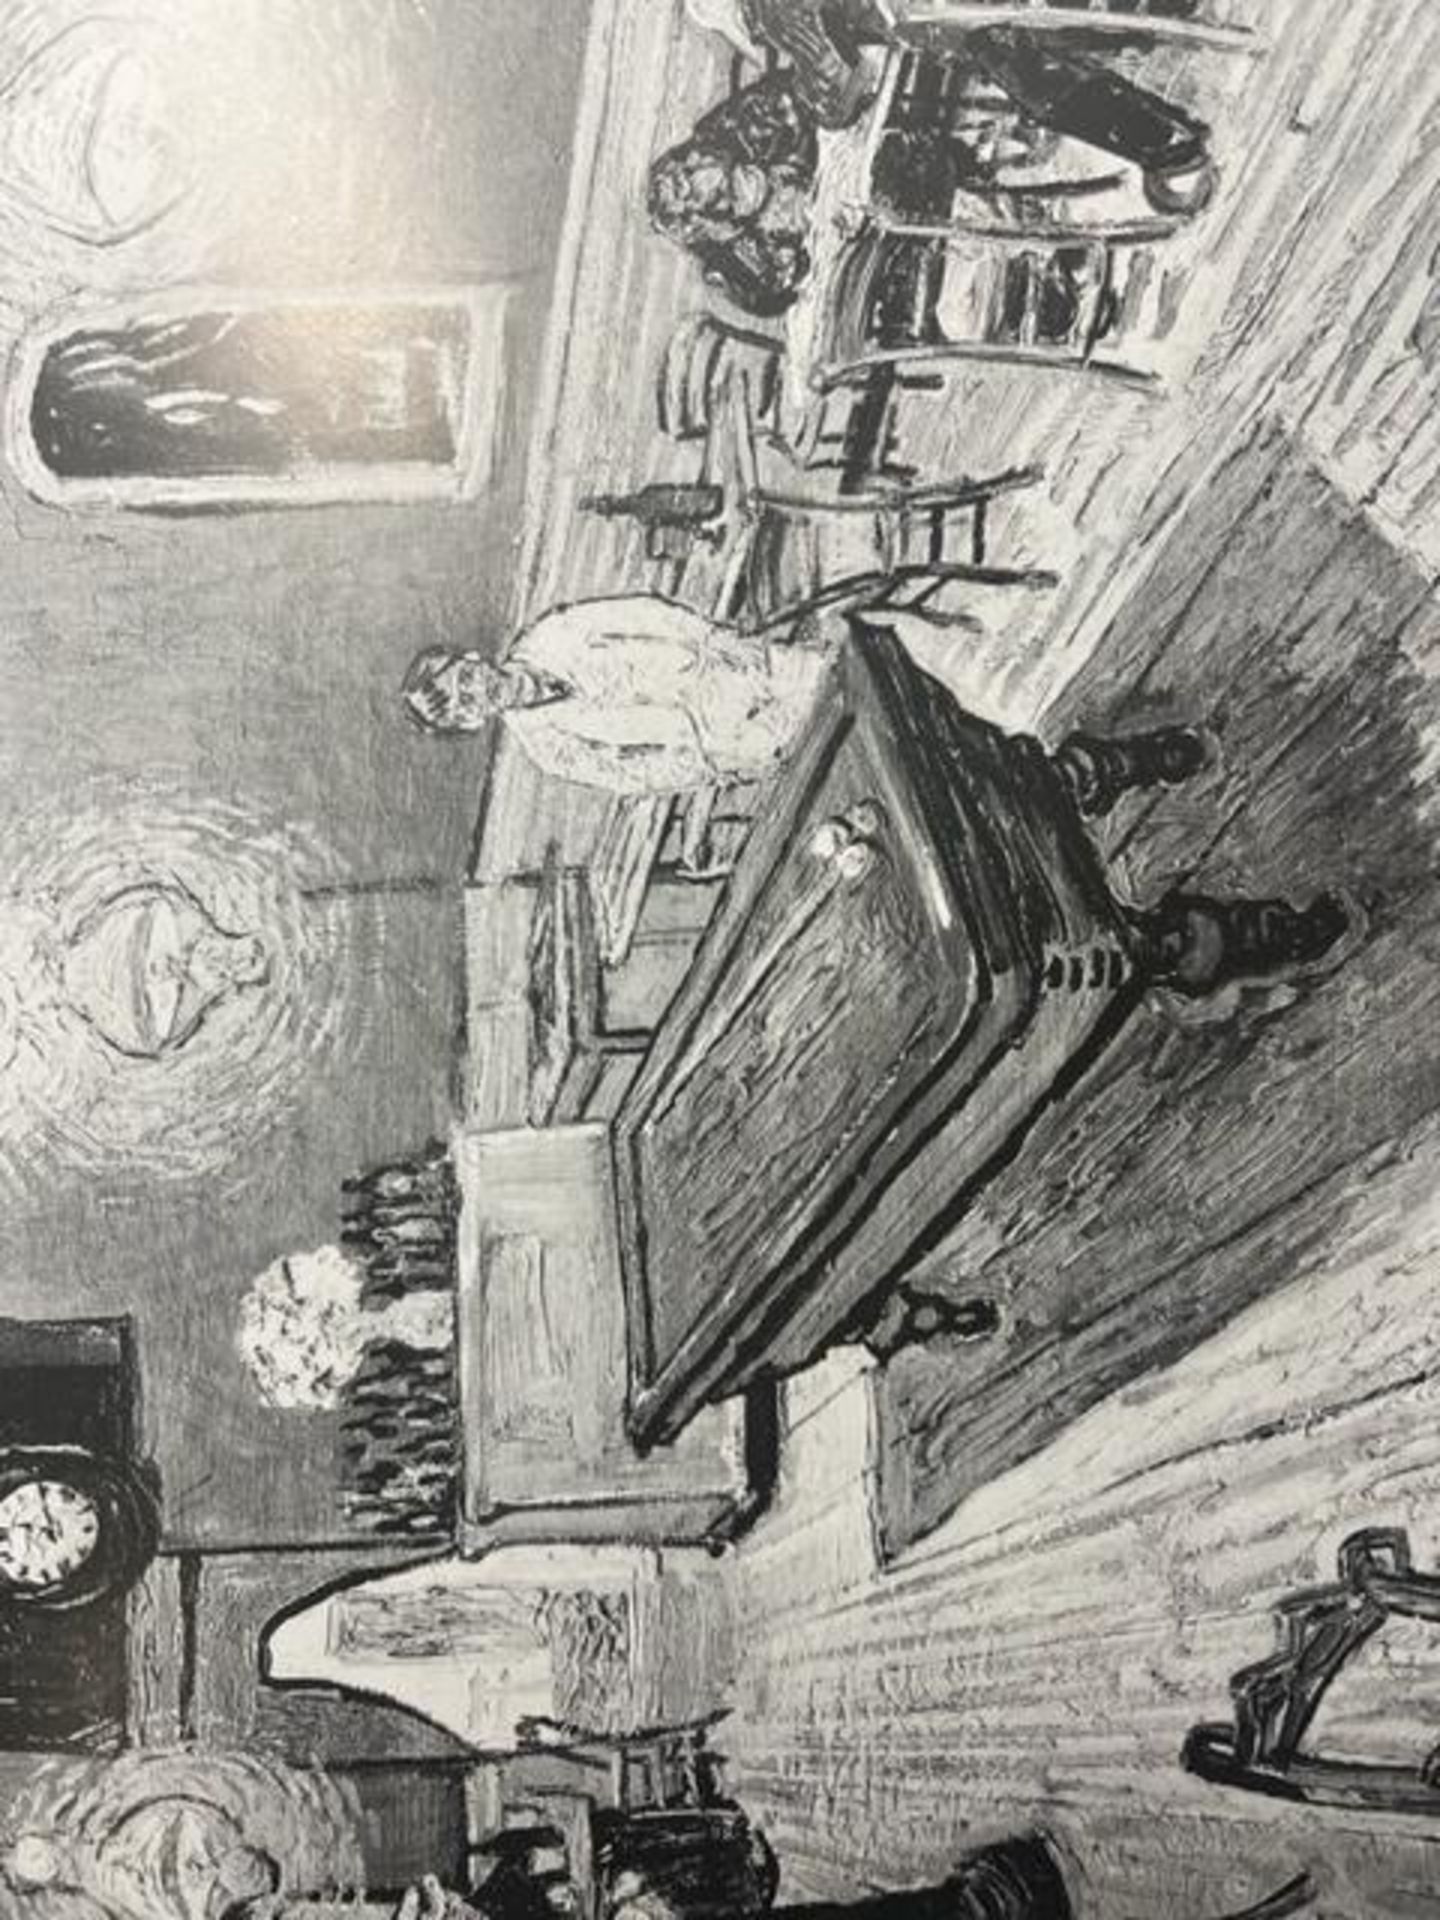 Vincent van Gogh "The Night Cafe" Print. - Bild 3 aus 6